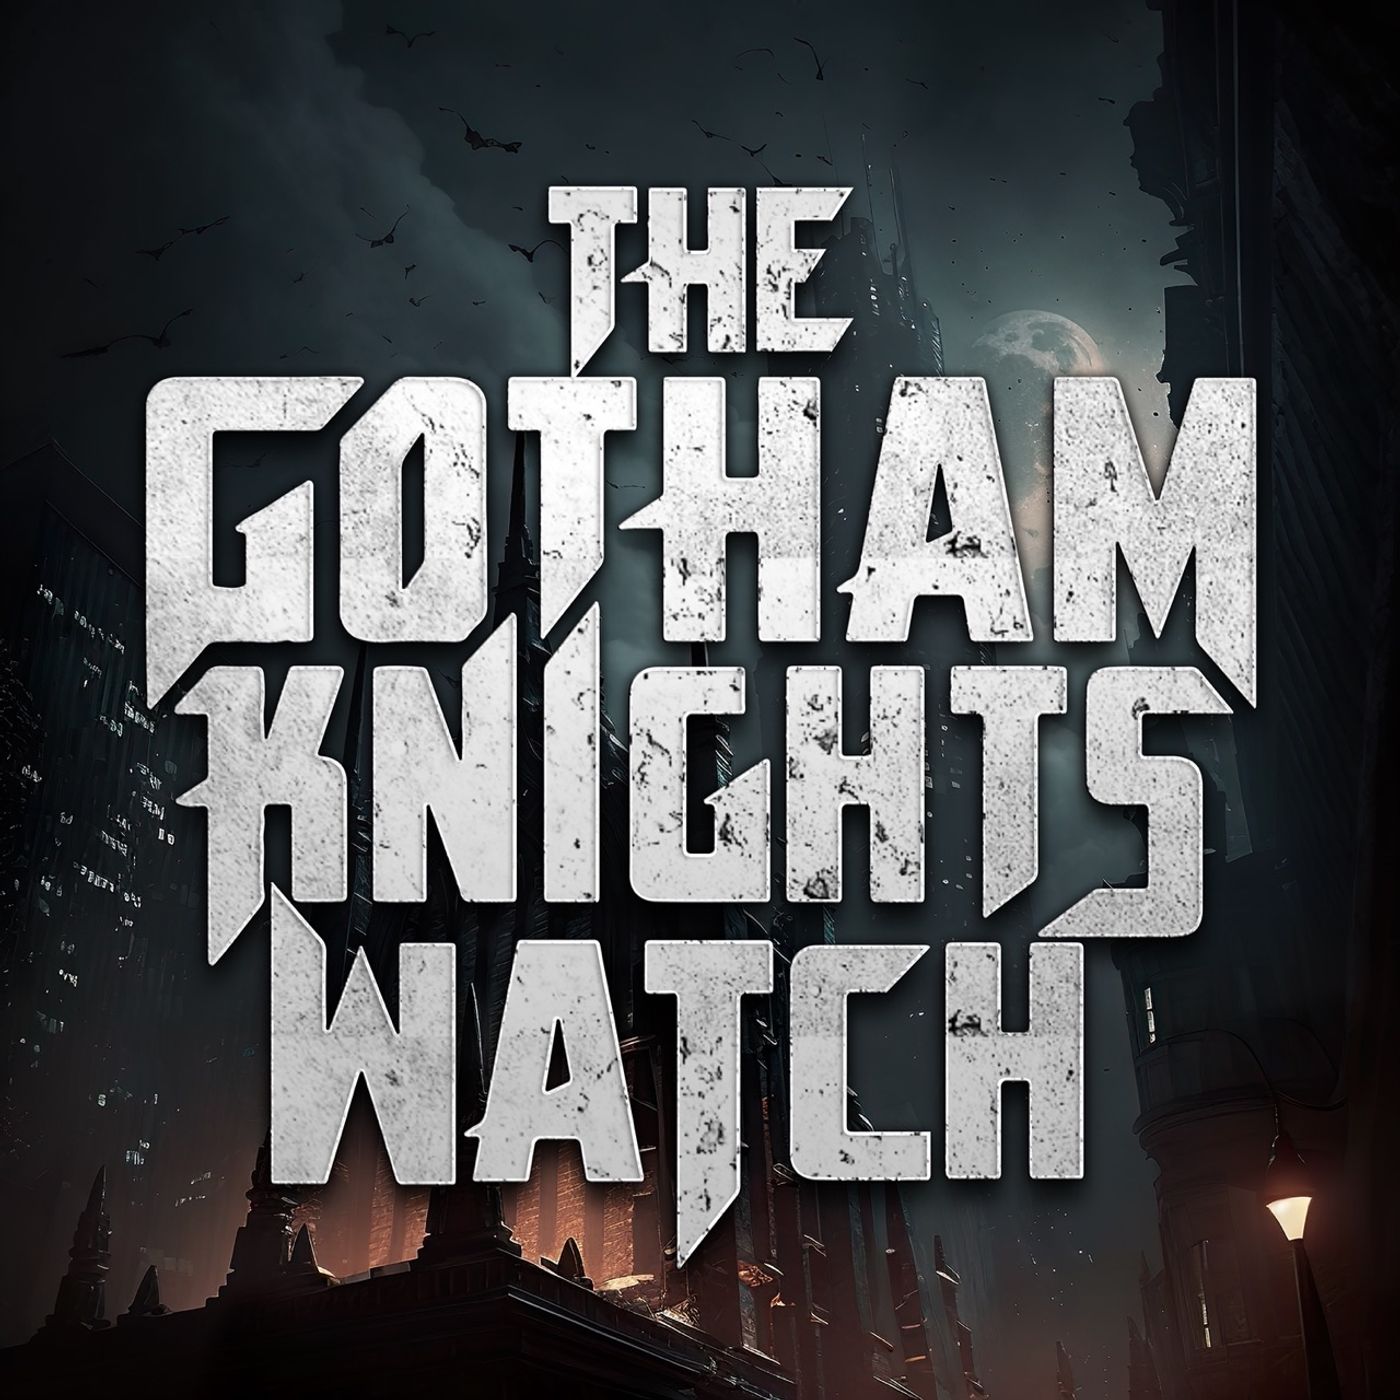 Watch Gotham Knights